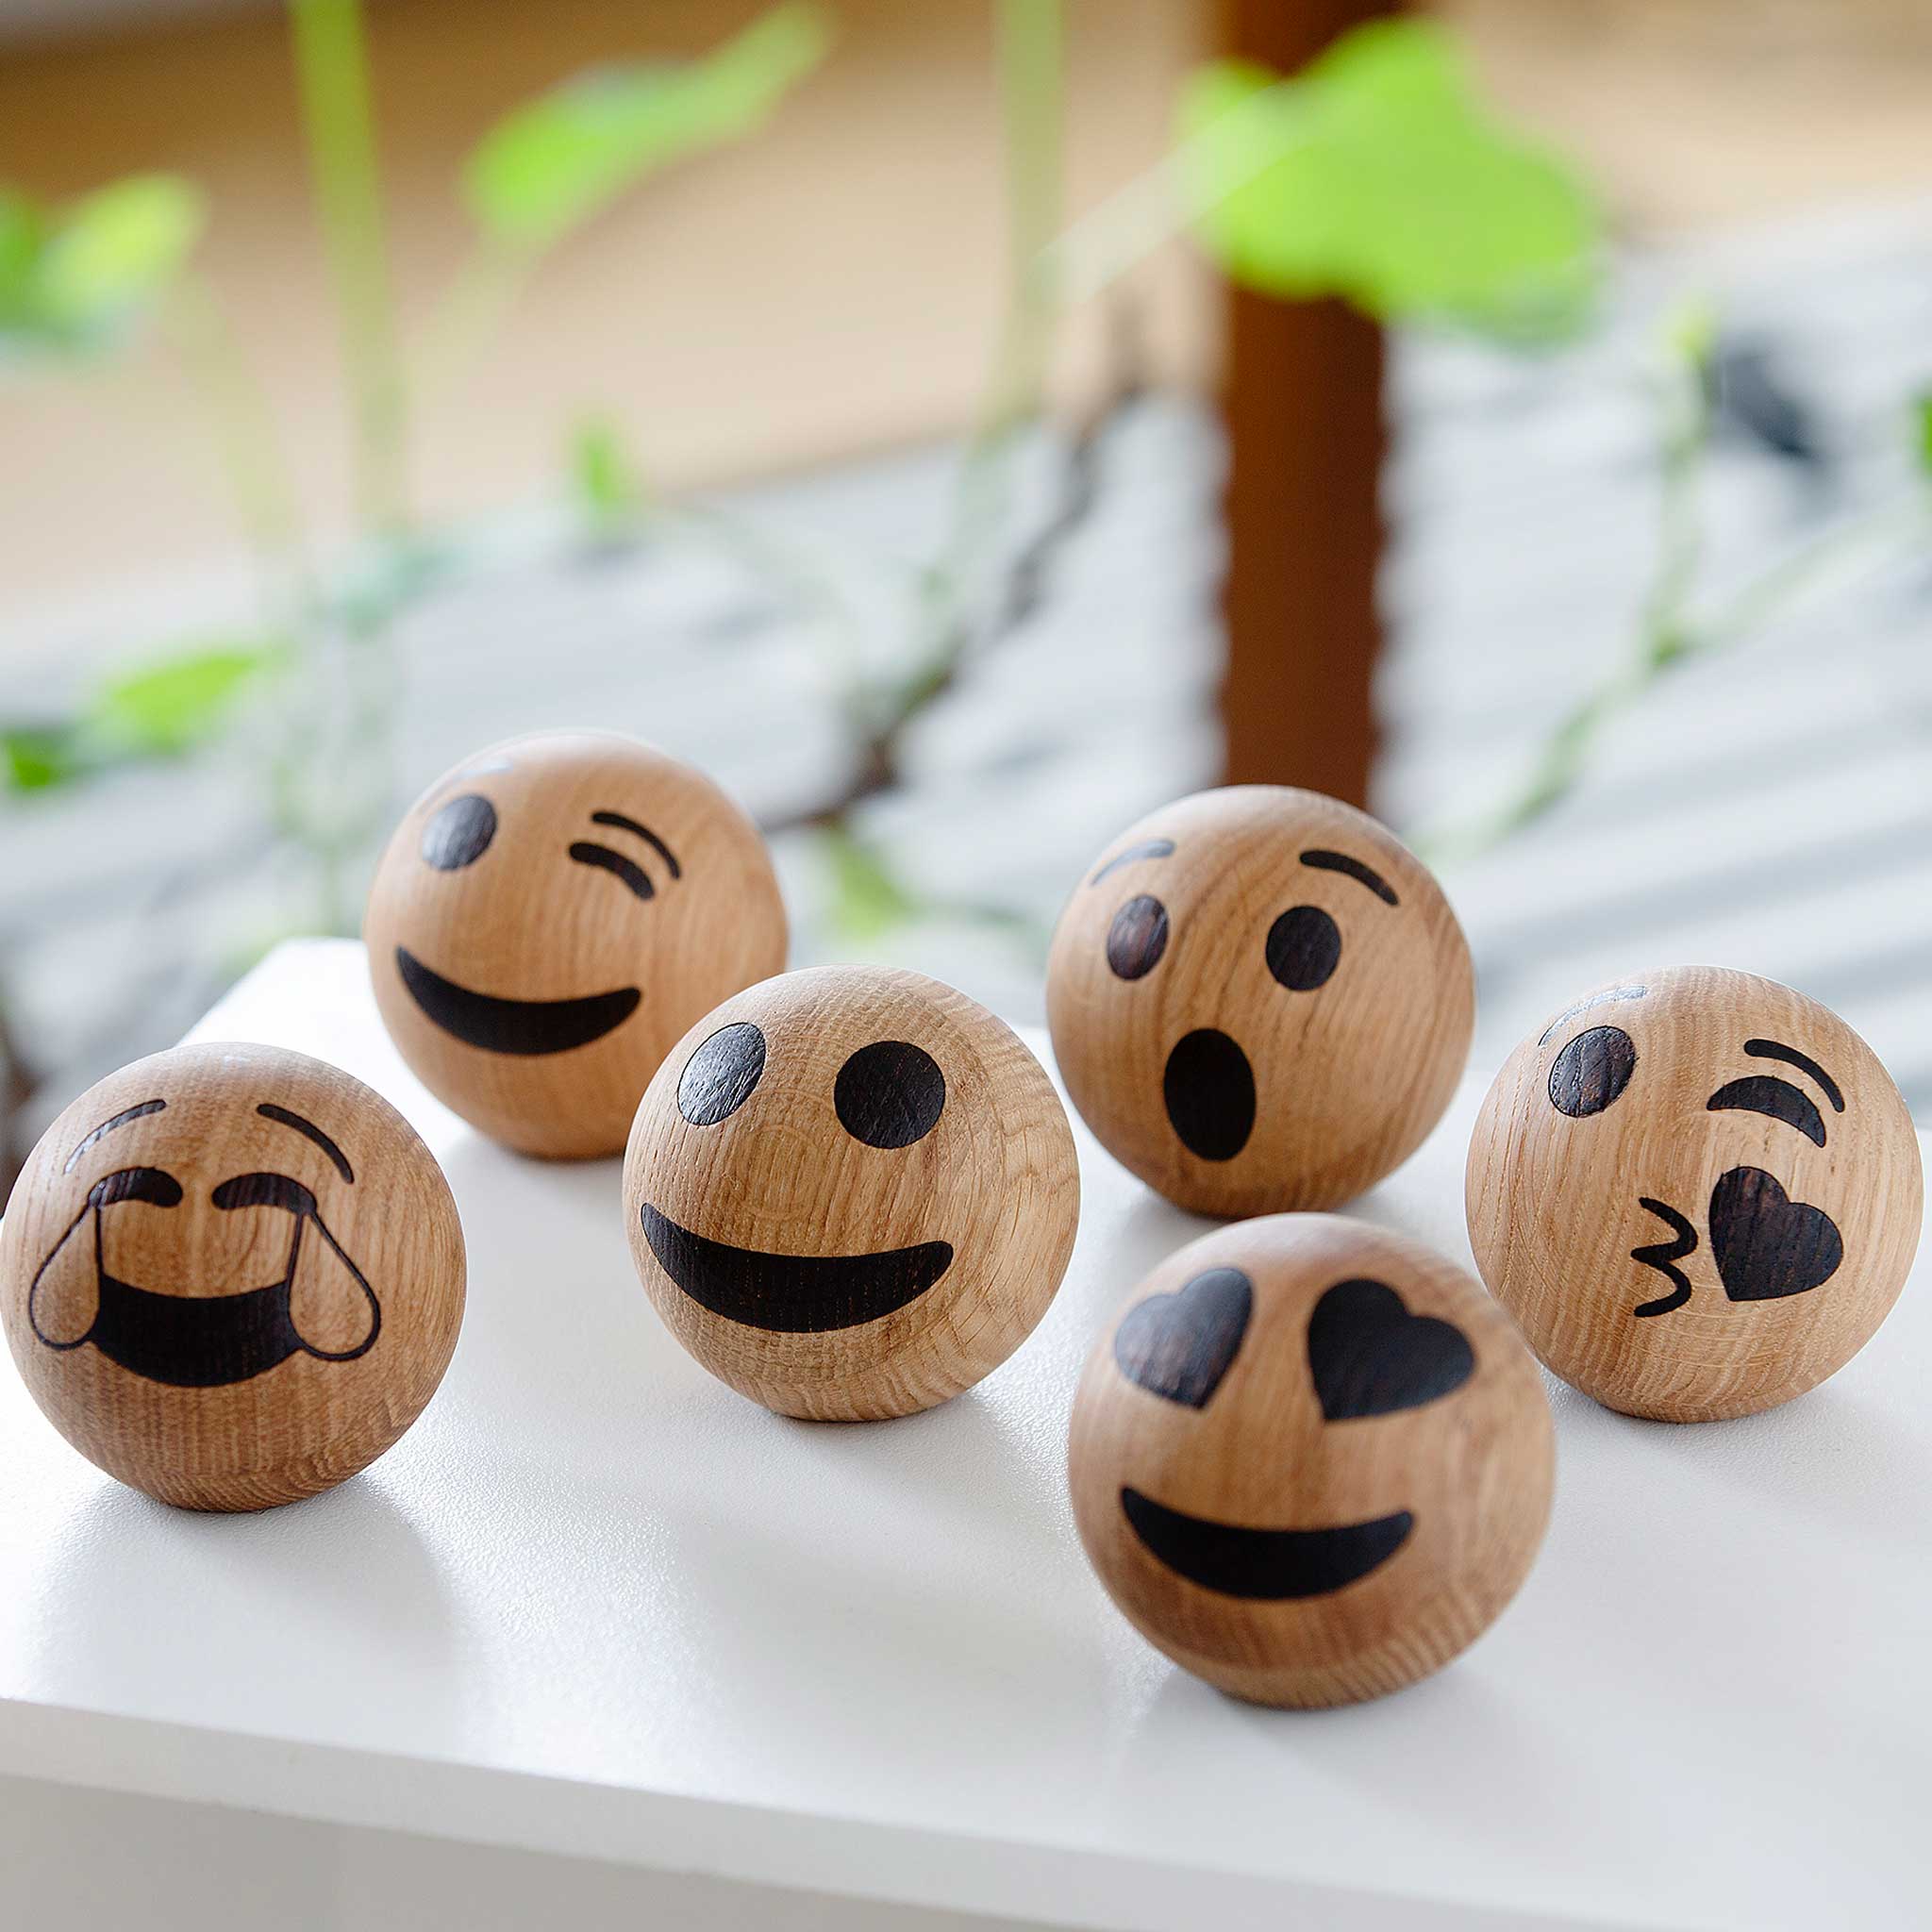 SPRING EMOTIONS | grinsendes Gesicht | Holz EMOTICONS | mencke&vagnby | Spring Copenhagen - Charles & Marie